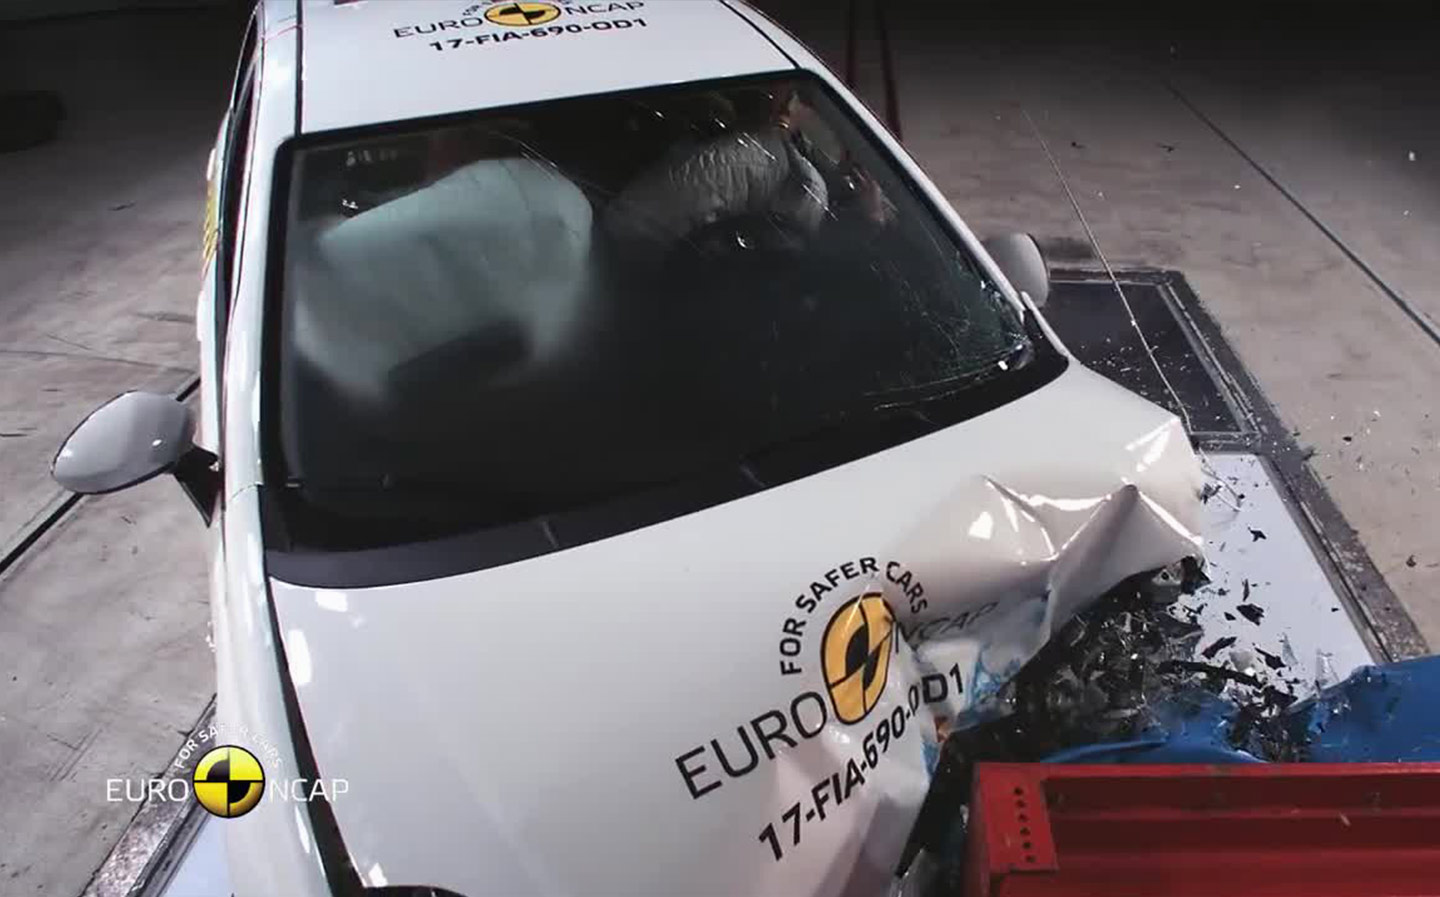 2017 Fiat Punto frontal offset collision test